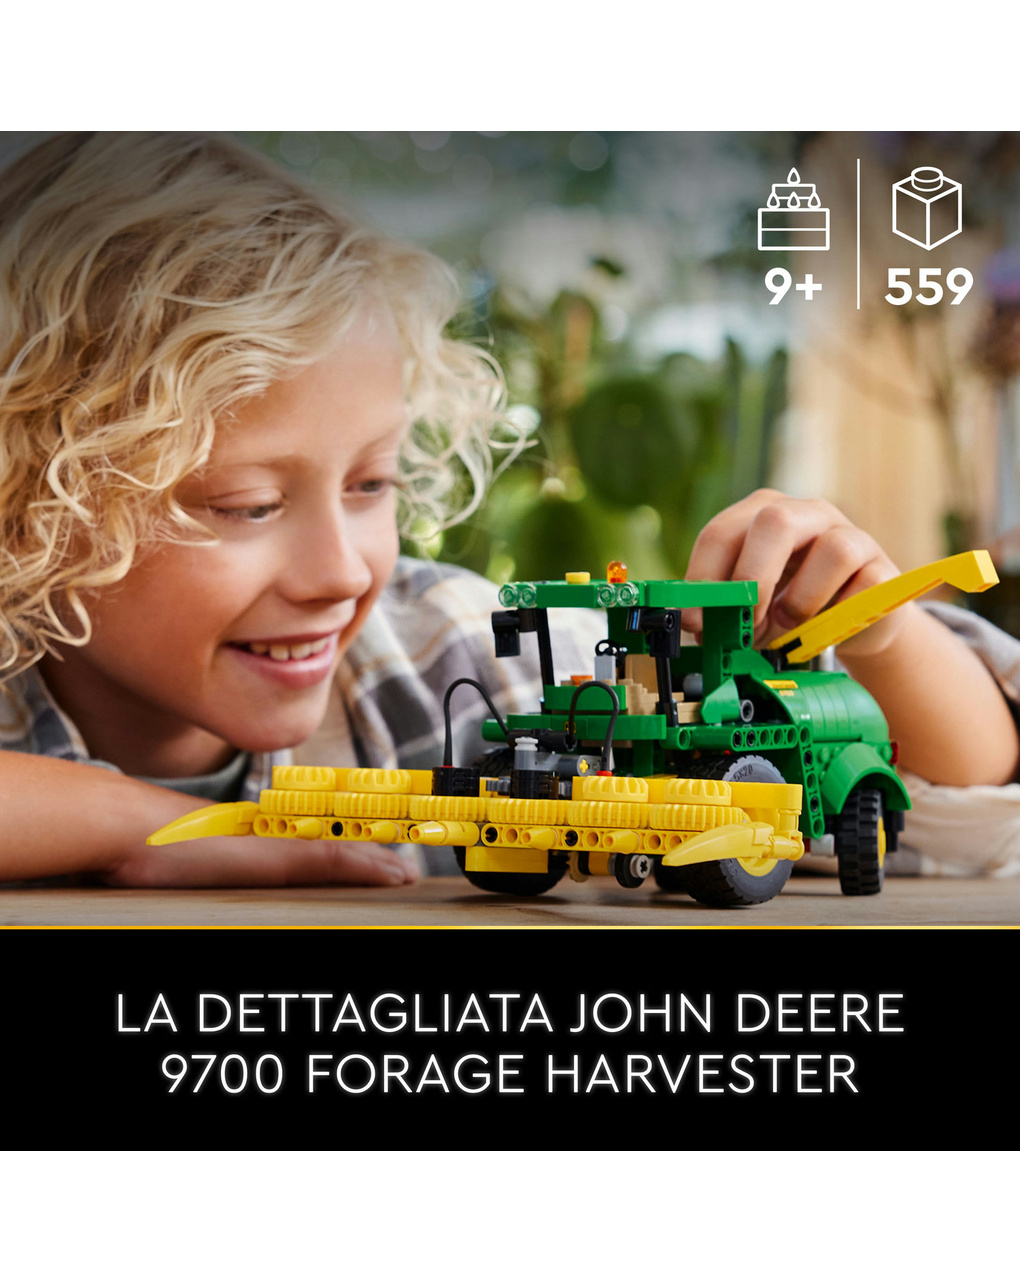 Cosechadora de forraje john deere 9700 - 42168 - lego technic - LEGO